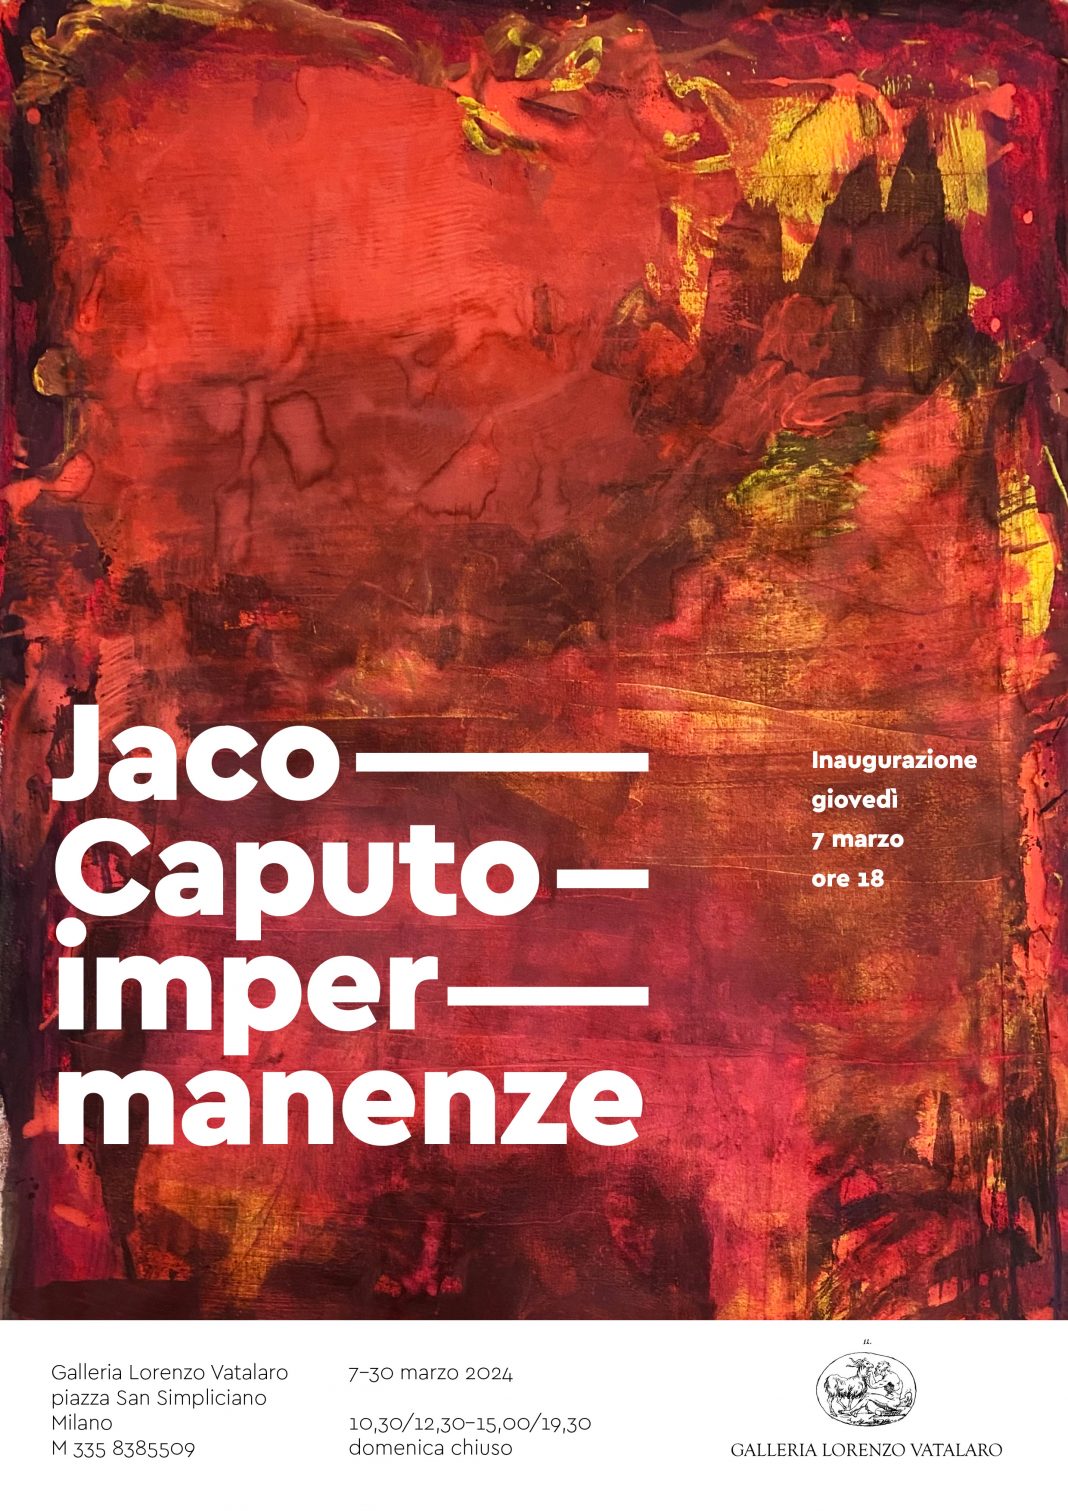 Jaco Caputo – Impermanenzehttps://www.exibart.com/repository/media/formidable/11/img/1d2/invito-Caputo-1068x1511.jpg